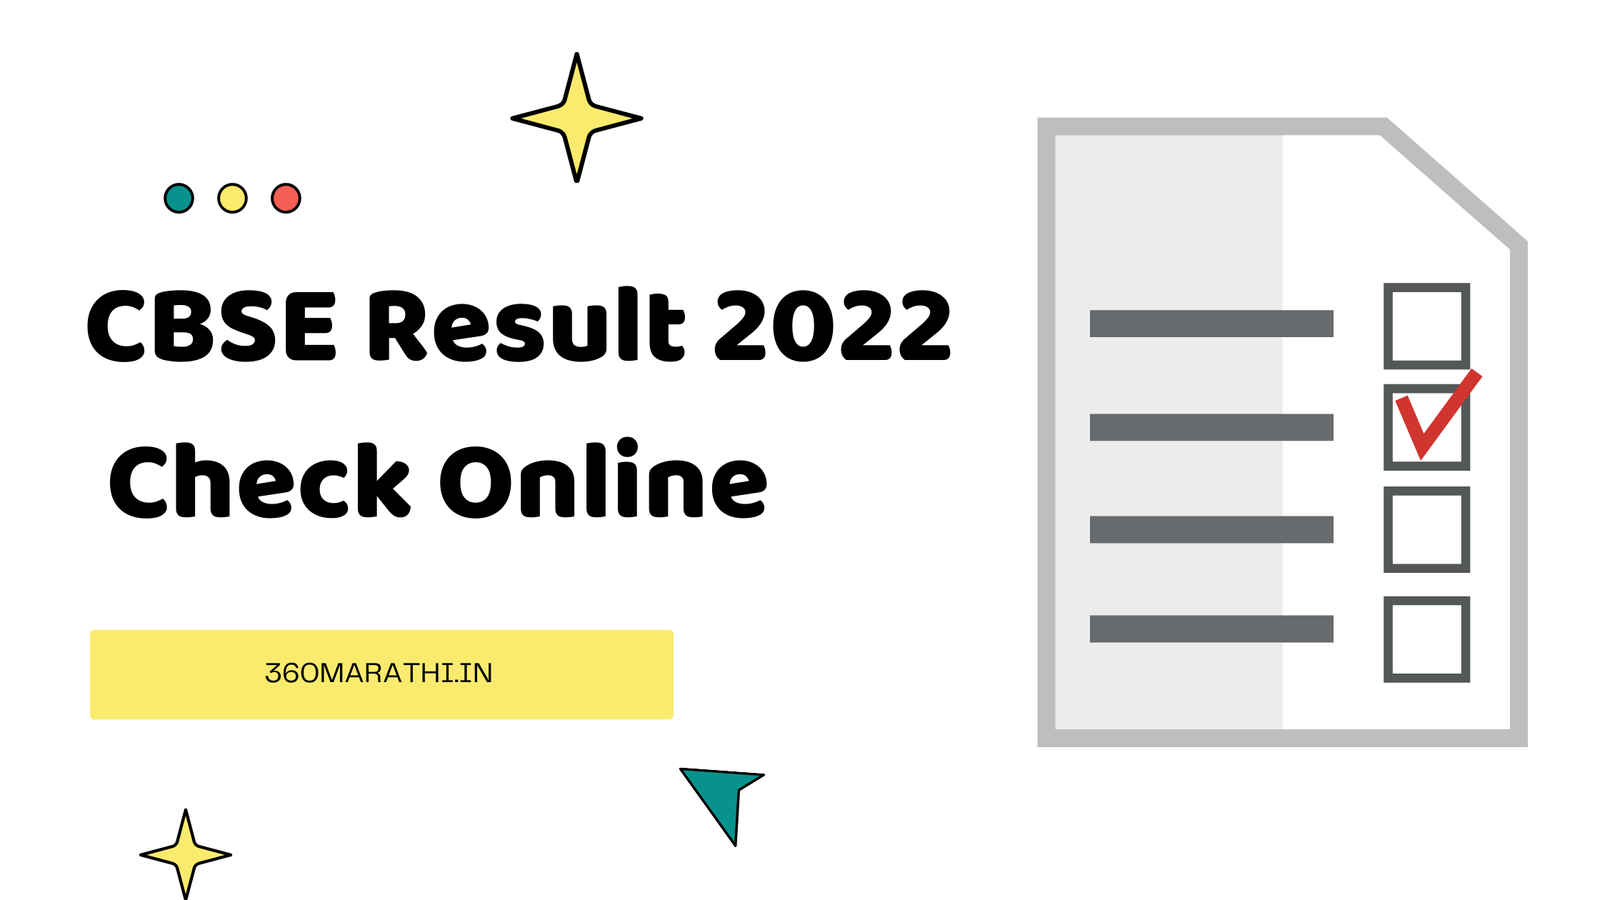 CBSE Result 2022 Check